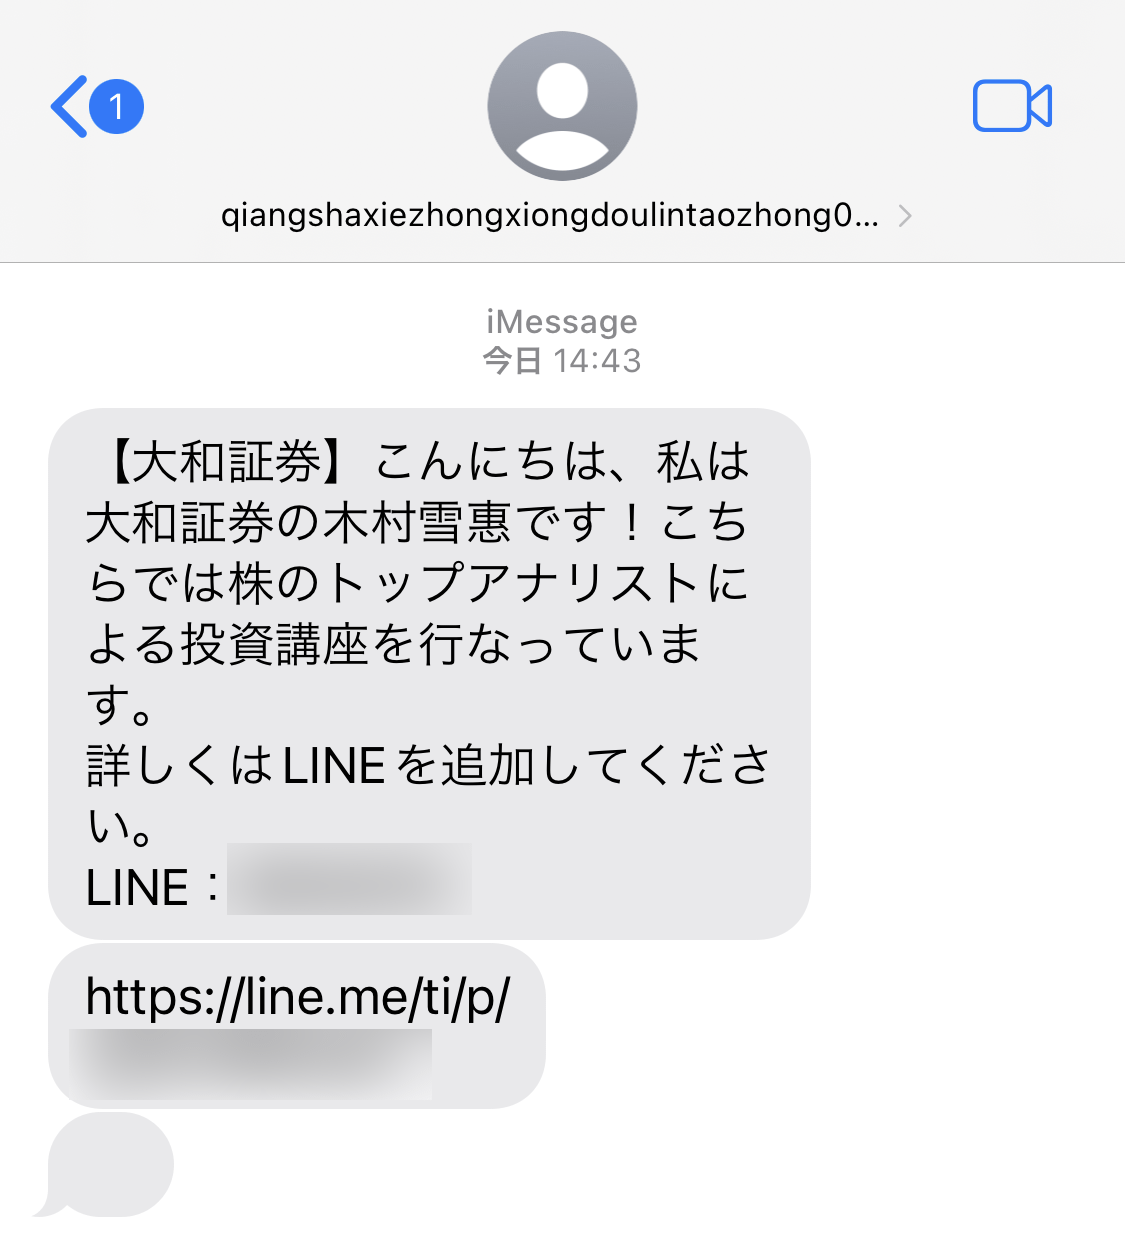 SMS Fishingsagimassage delete 02